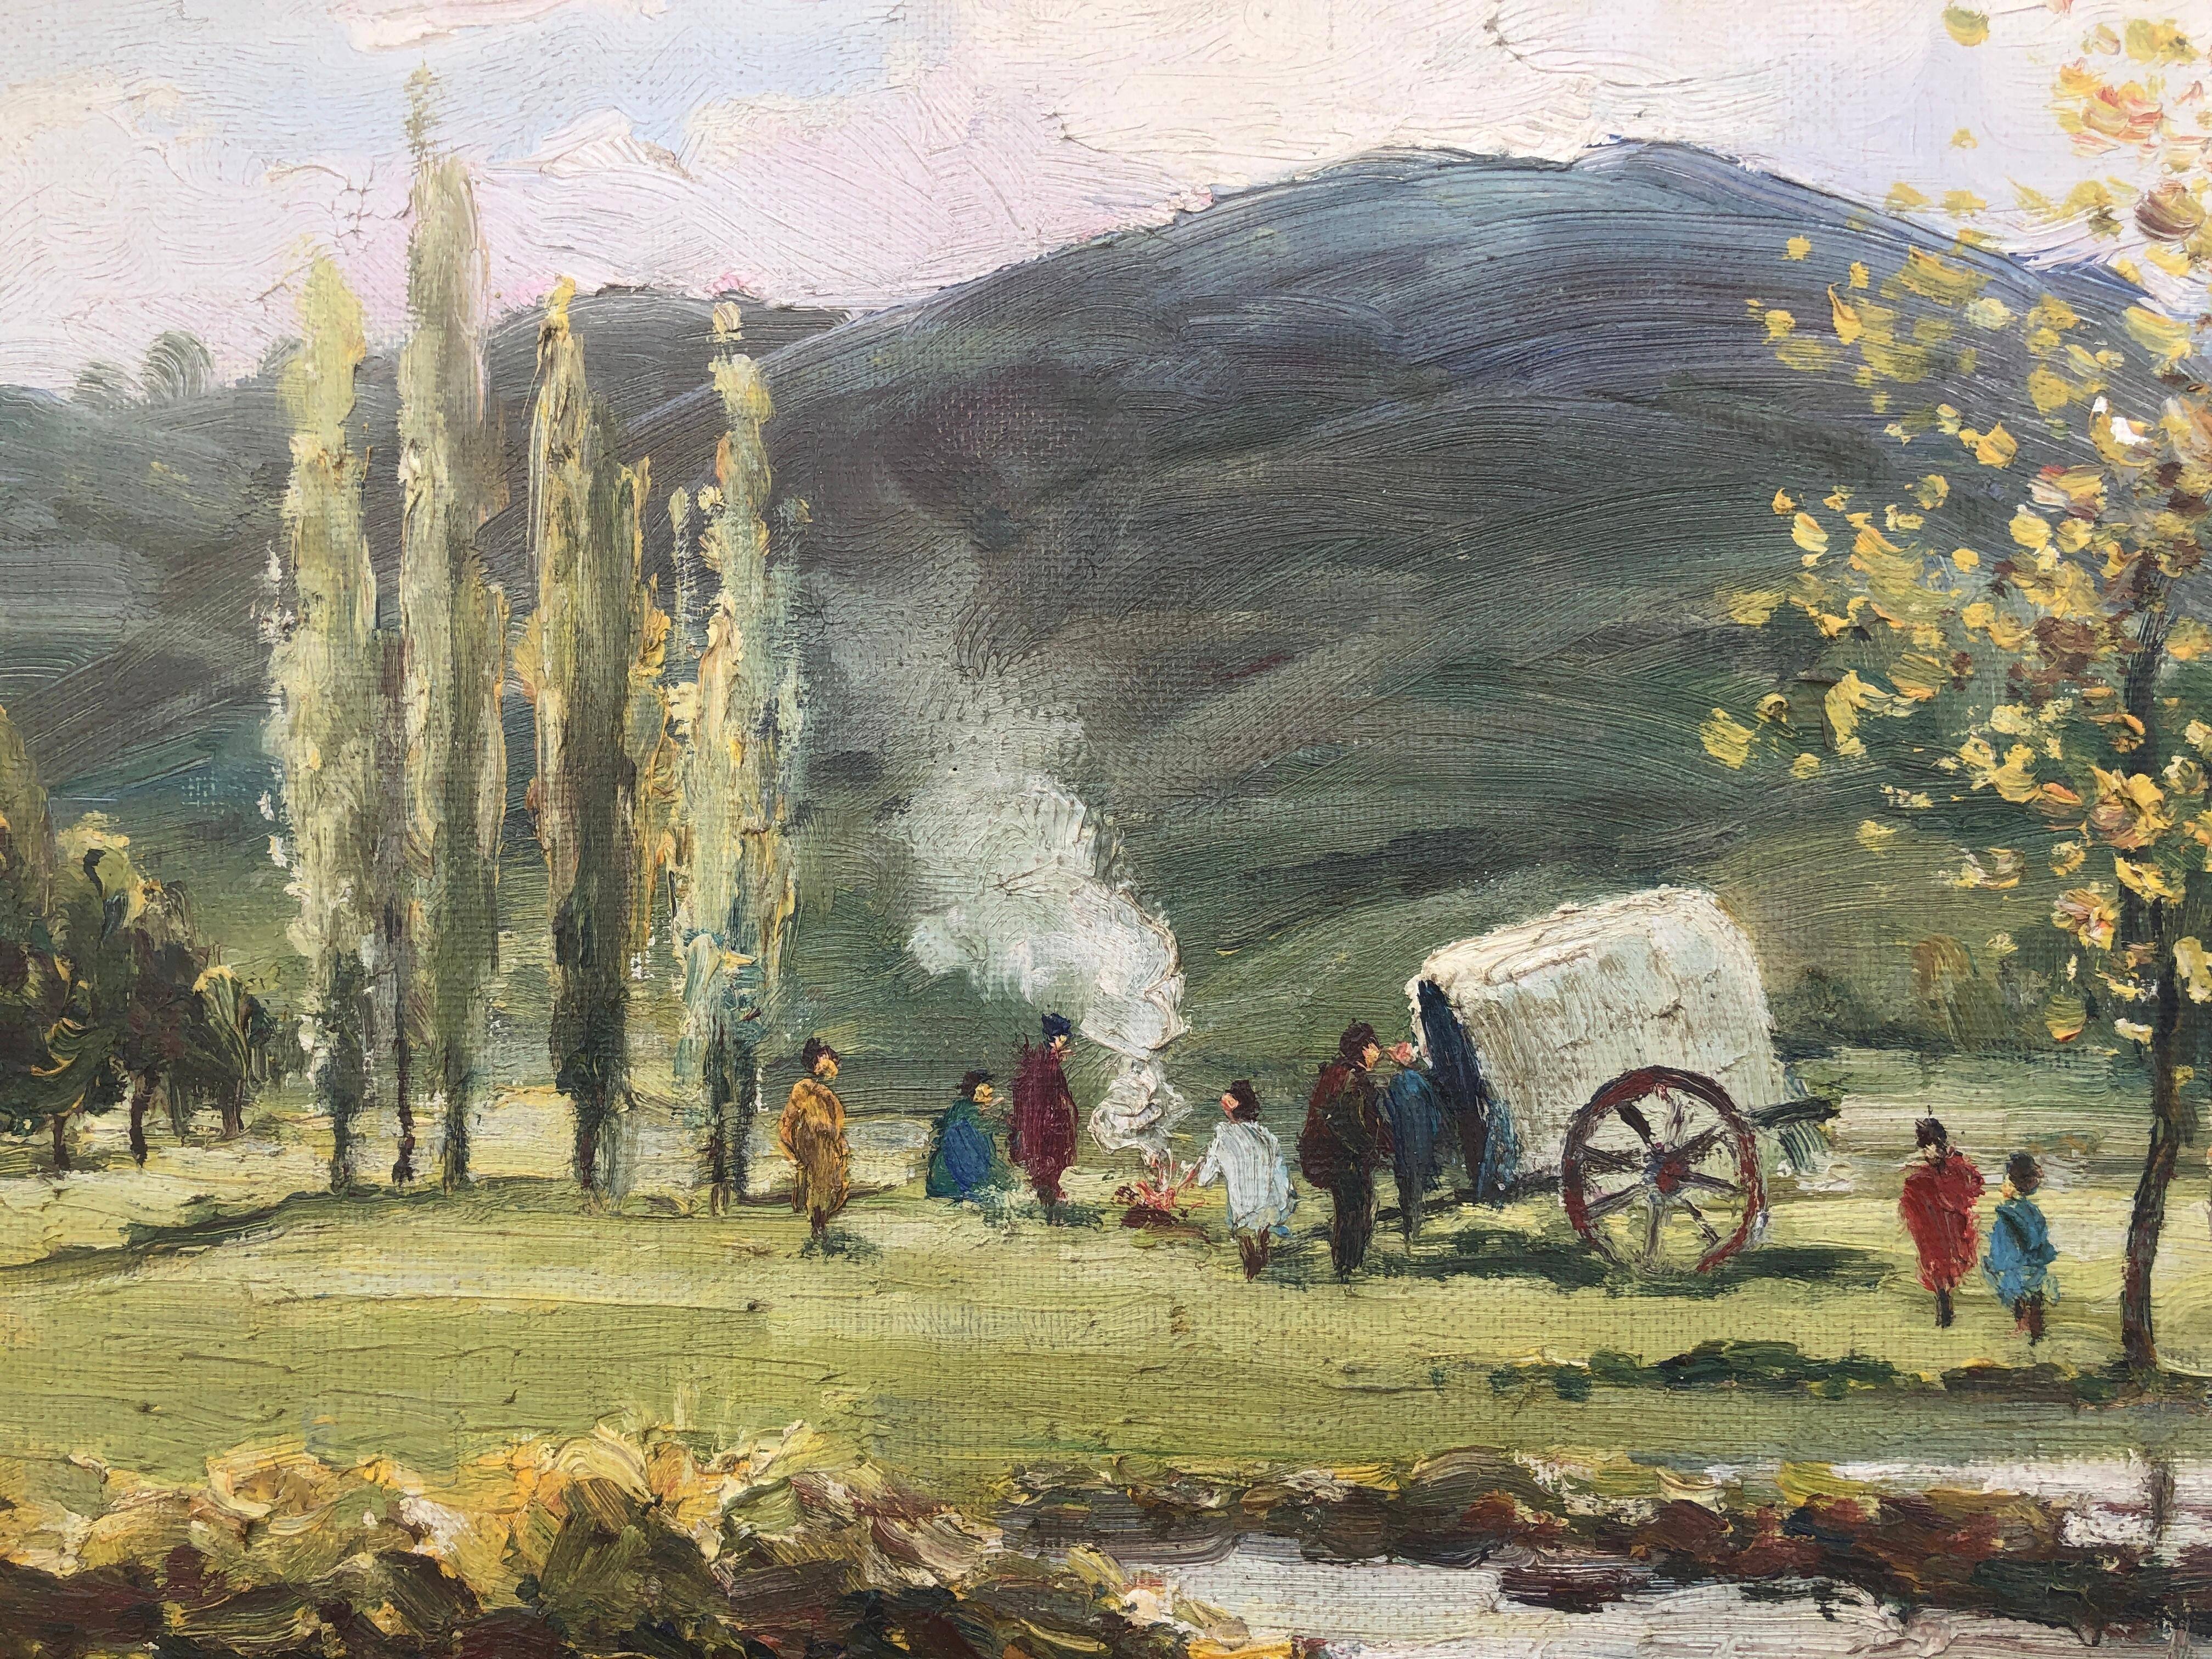 Serrat Calvo - Gypsies in the river - Oil on canvas
Oil measures 25x33 cm.
Frame measures 45x52 cm.